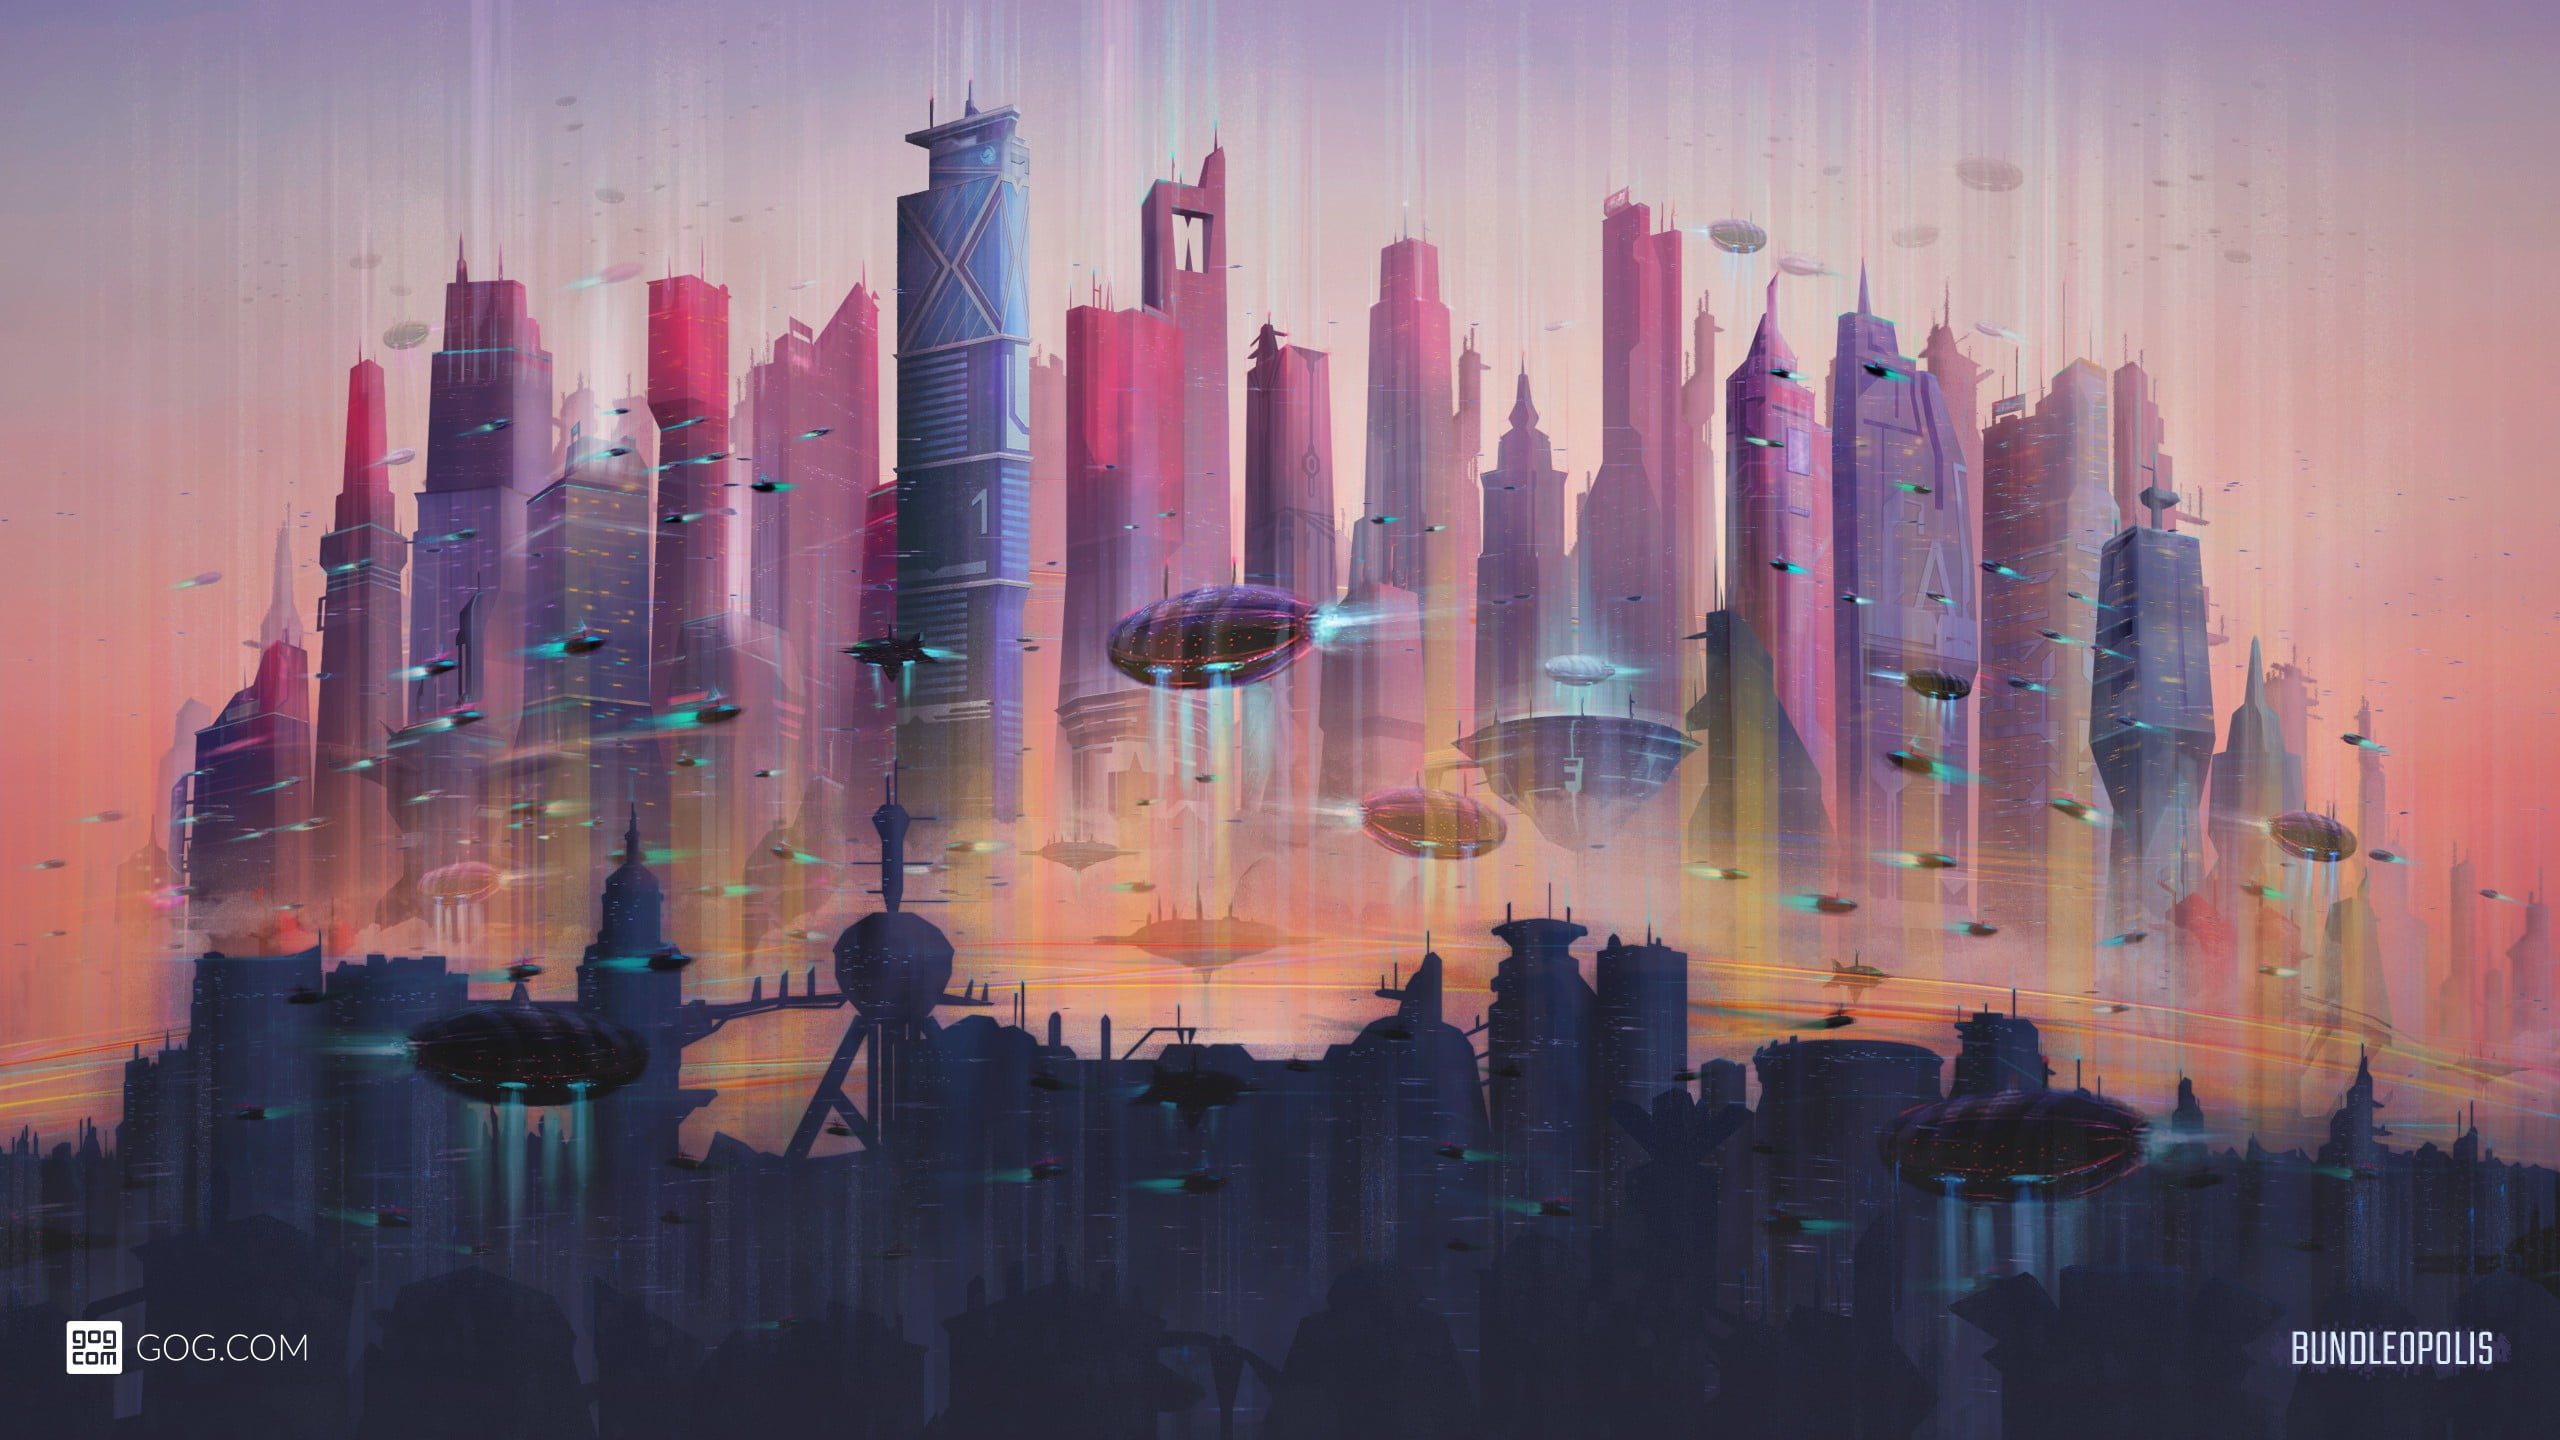 high-rise building and space ship digital wallpaper, GOG.com, futuristic, cityscape